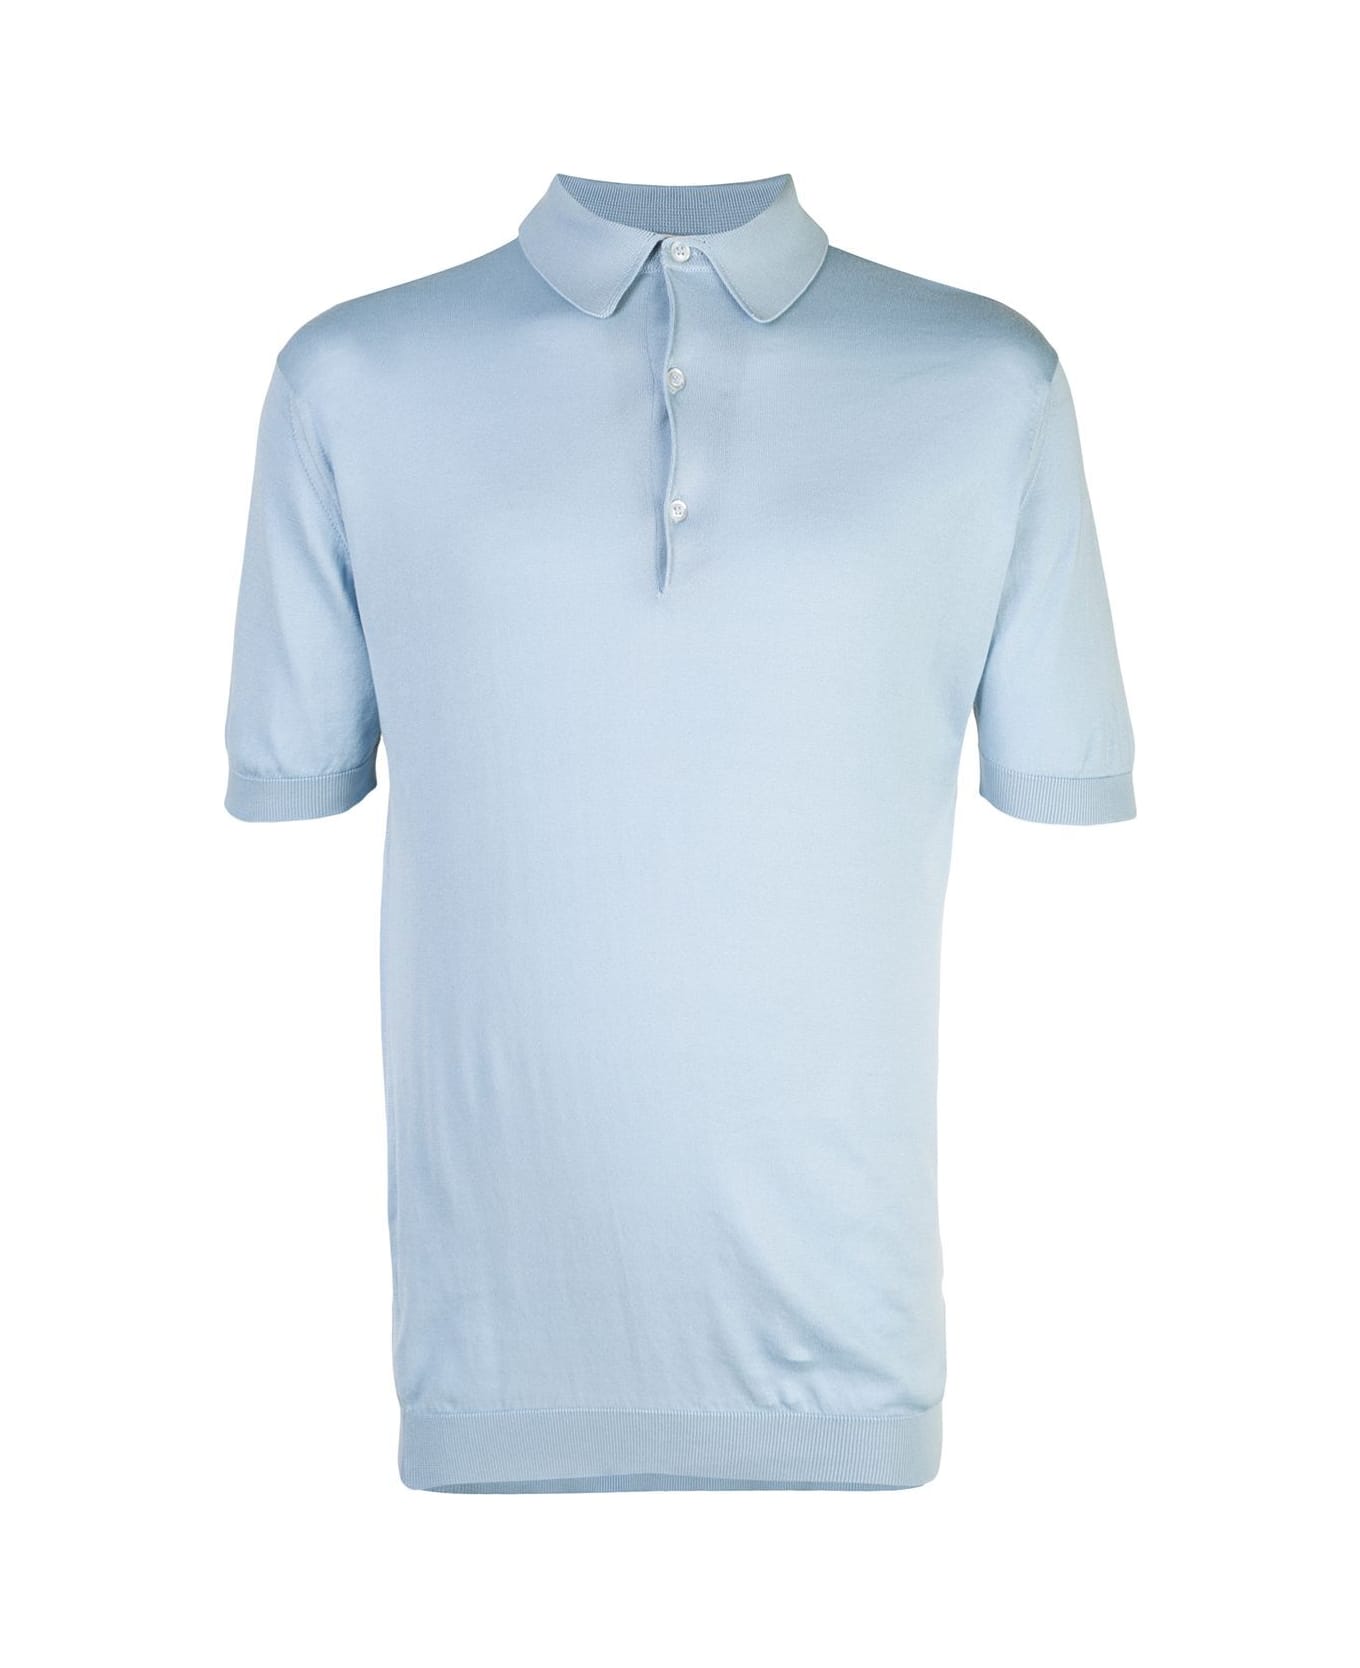 John Smedley Adrian Short Sleeves Shirt - Mirage Blue